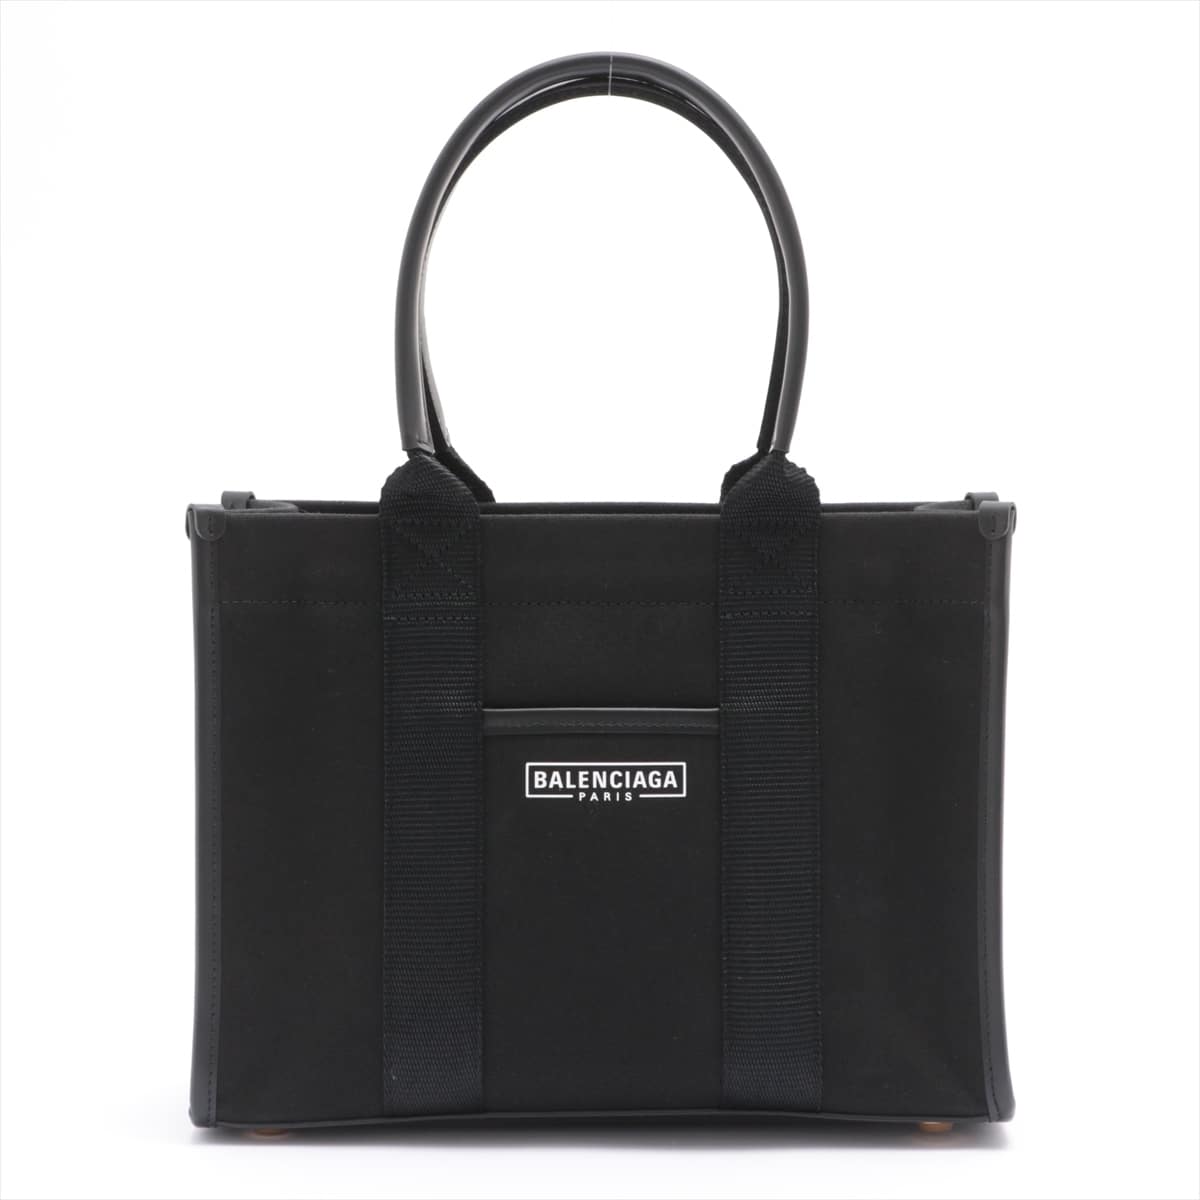 Balenciaga Hardware Canvas & leather 2way handbag Black 671402